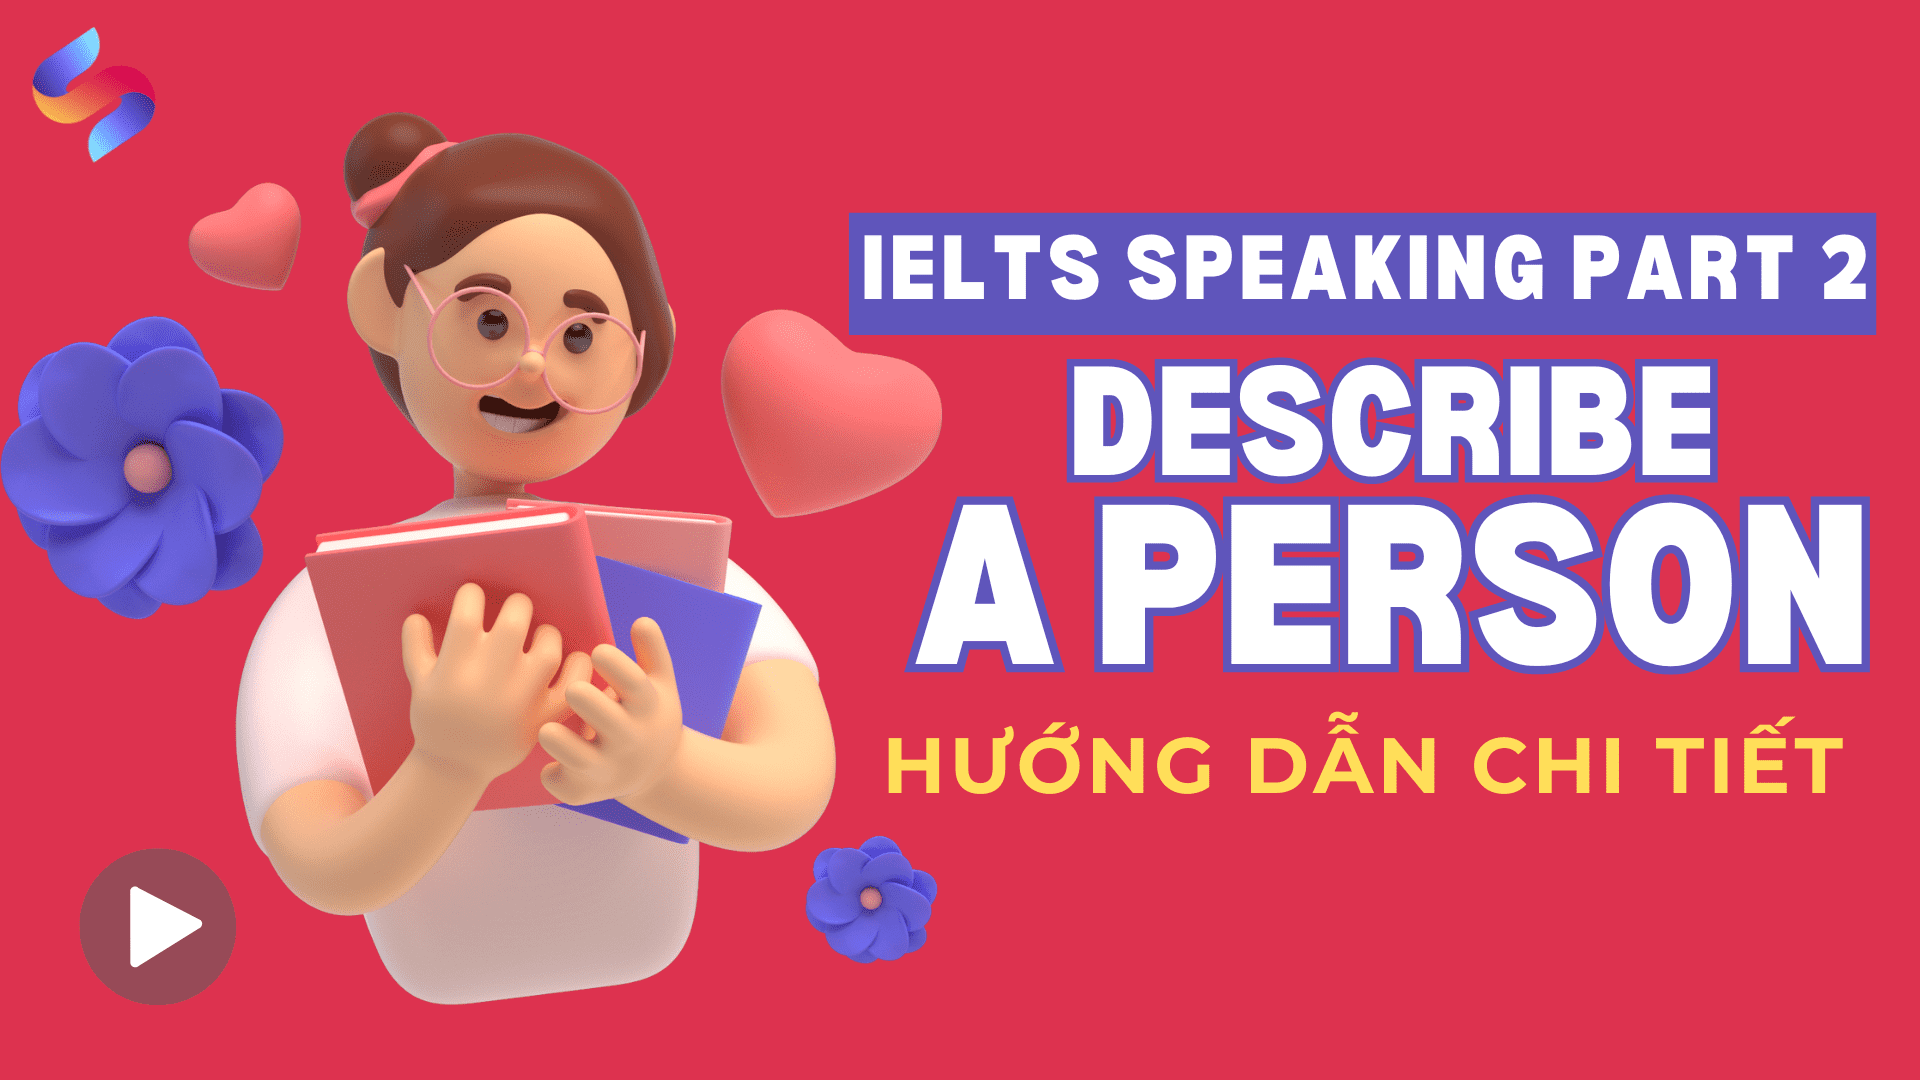 IELTS Speaking Part 2 – “Describe a person” [Hướng dẫn chi tiết]